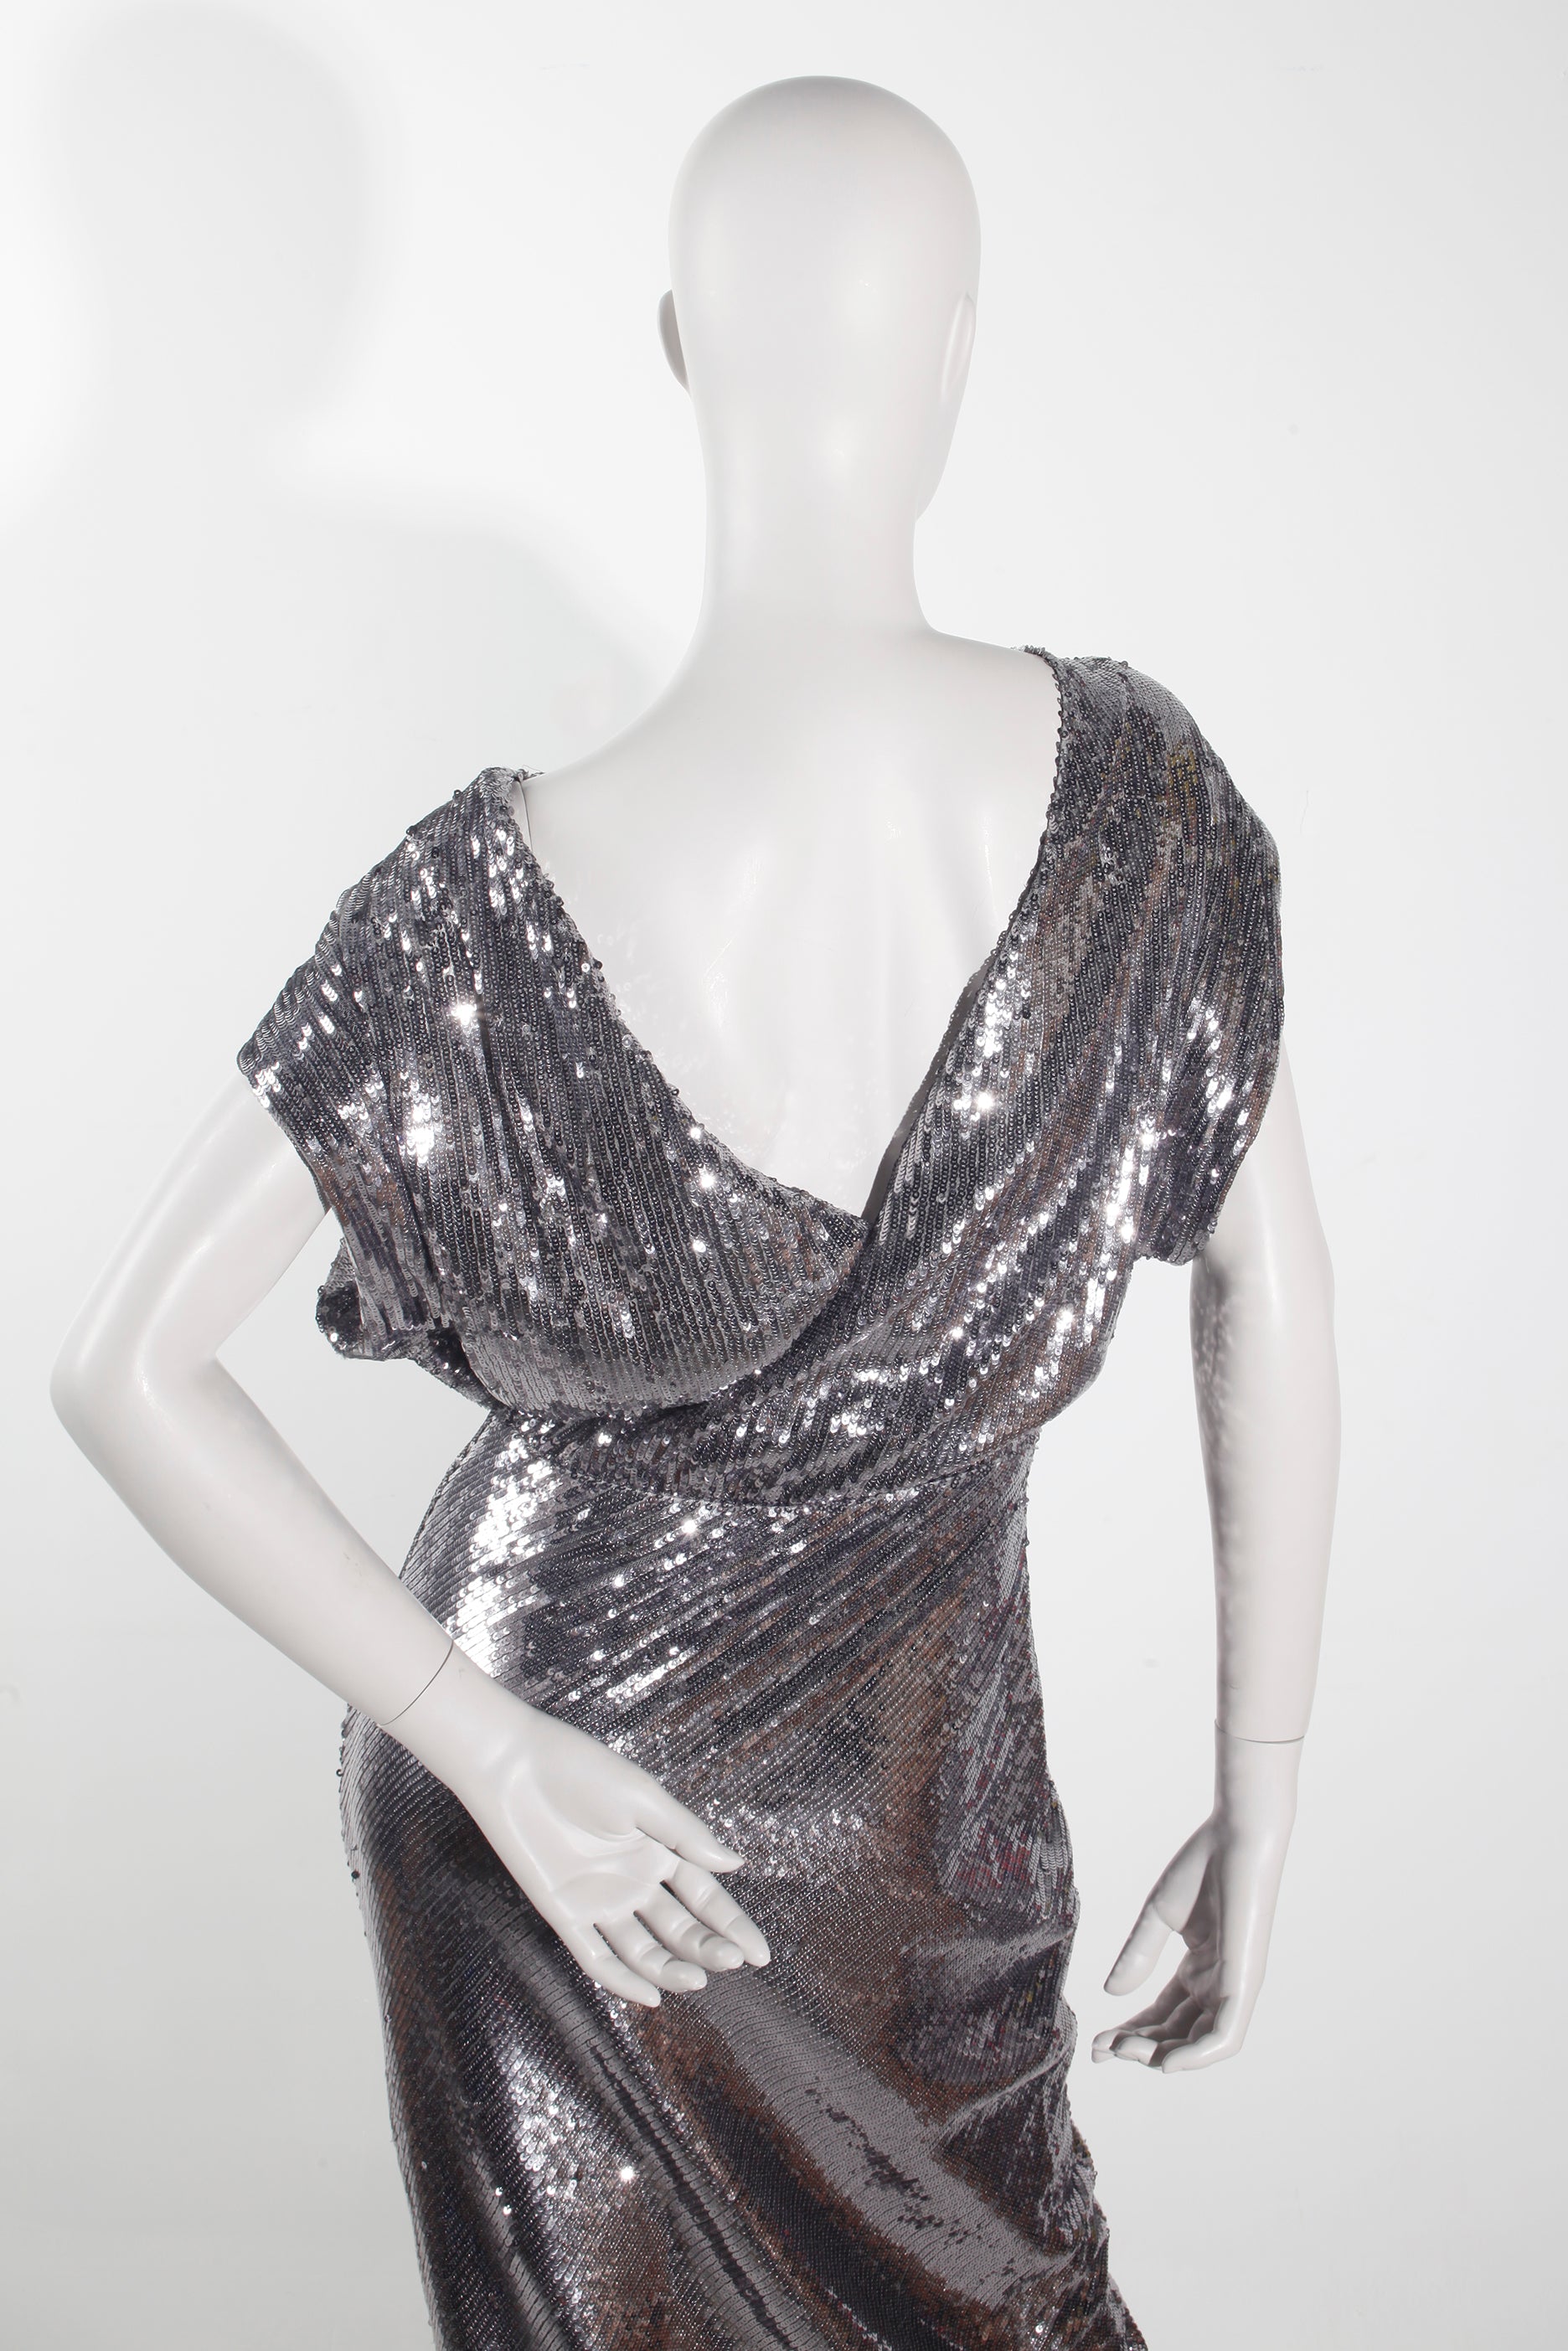 Zara Silver Sequin Dress (Eu38)